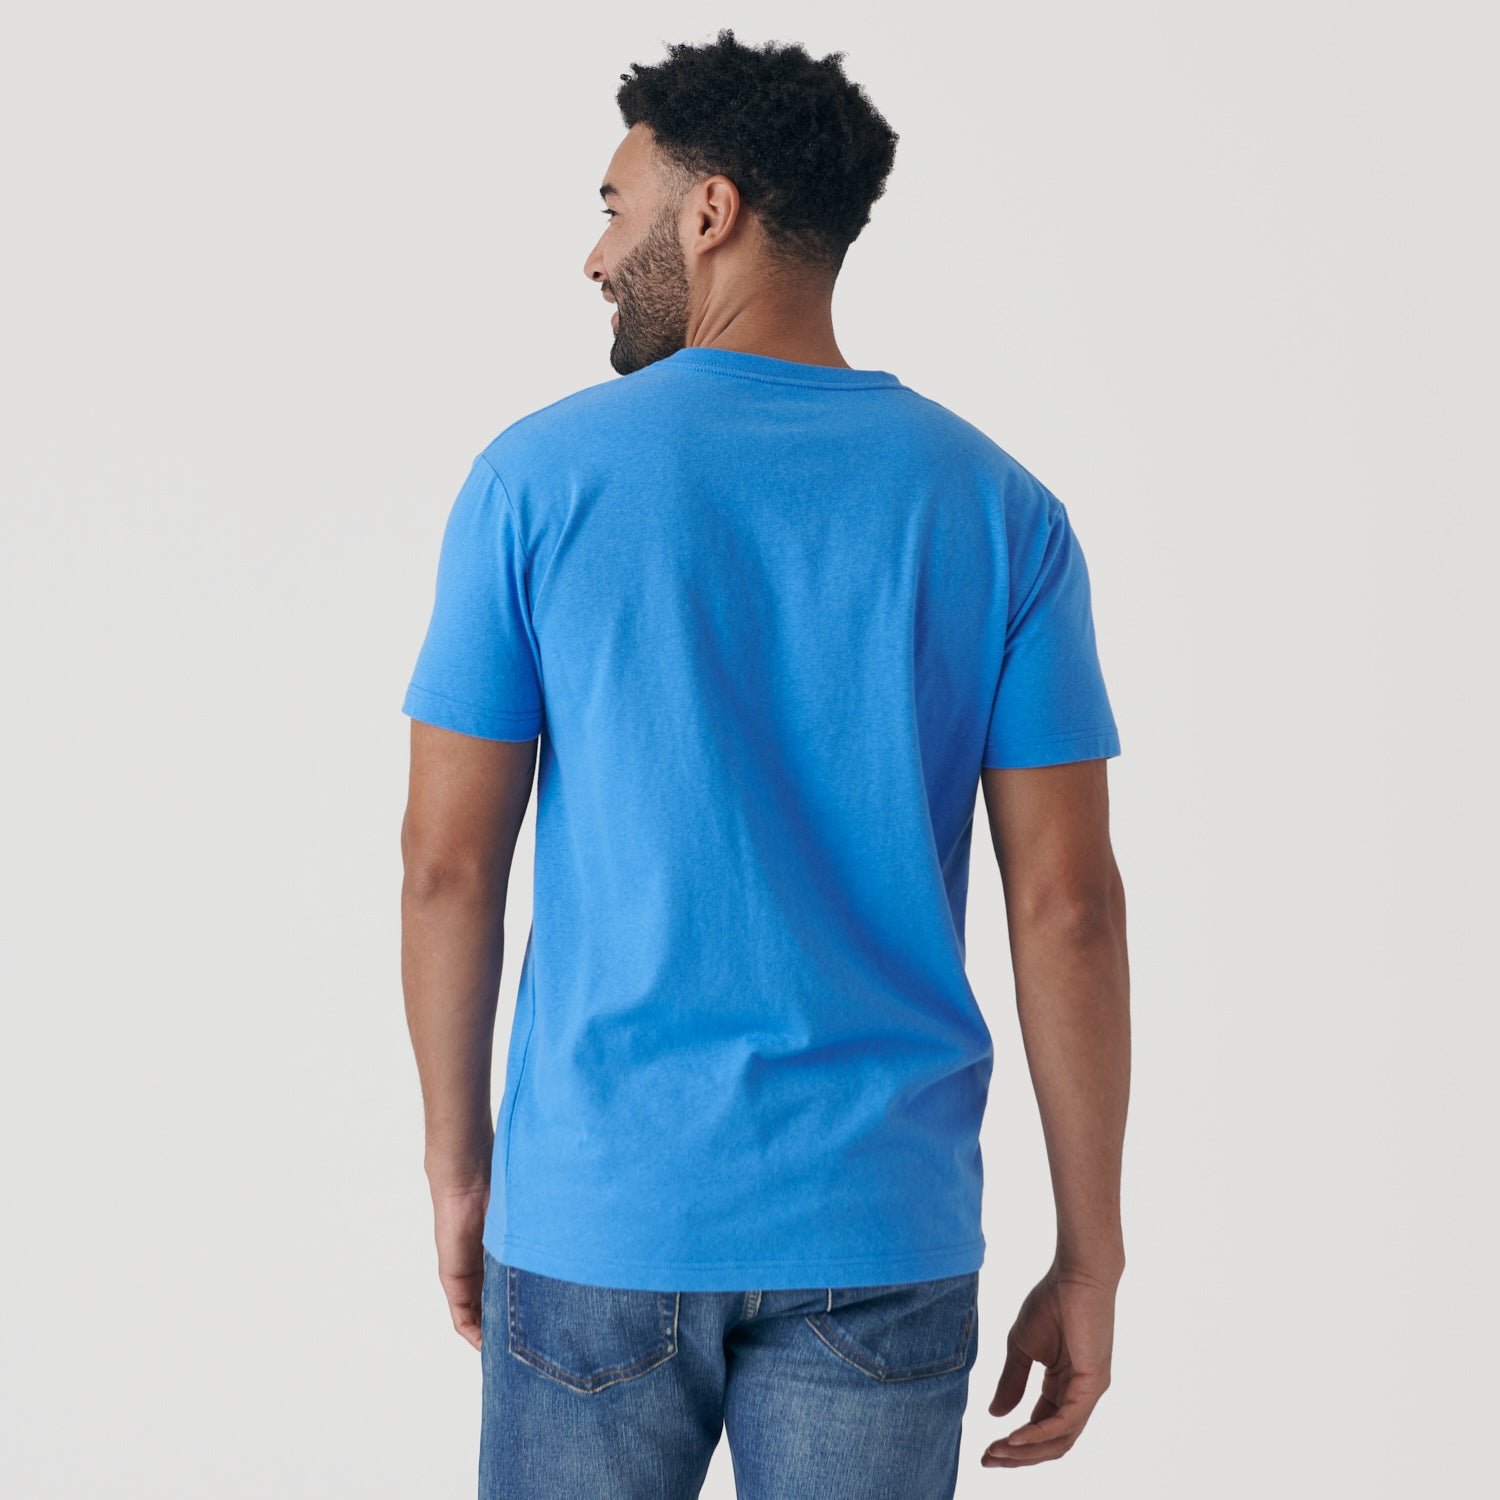 Periwinkle Blue V-Neck T-Shirt